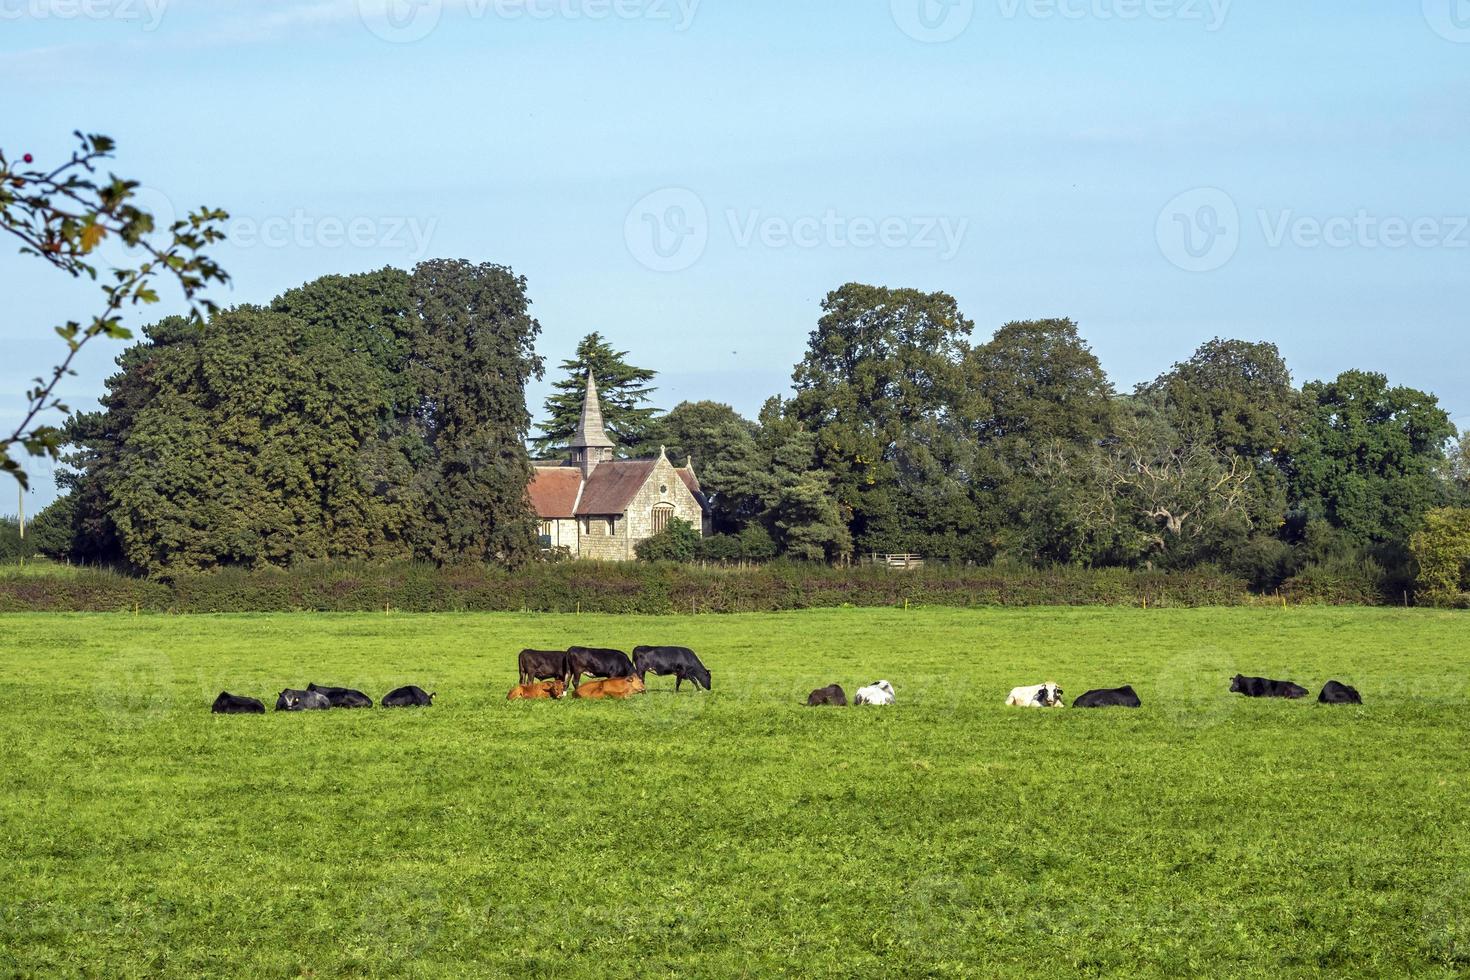 acaster malbis bykyrka bakom ett fält av kor, norra yorkshire, england foto